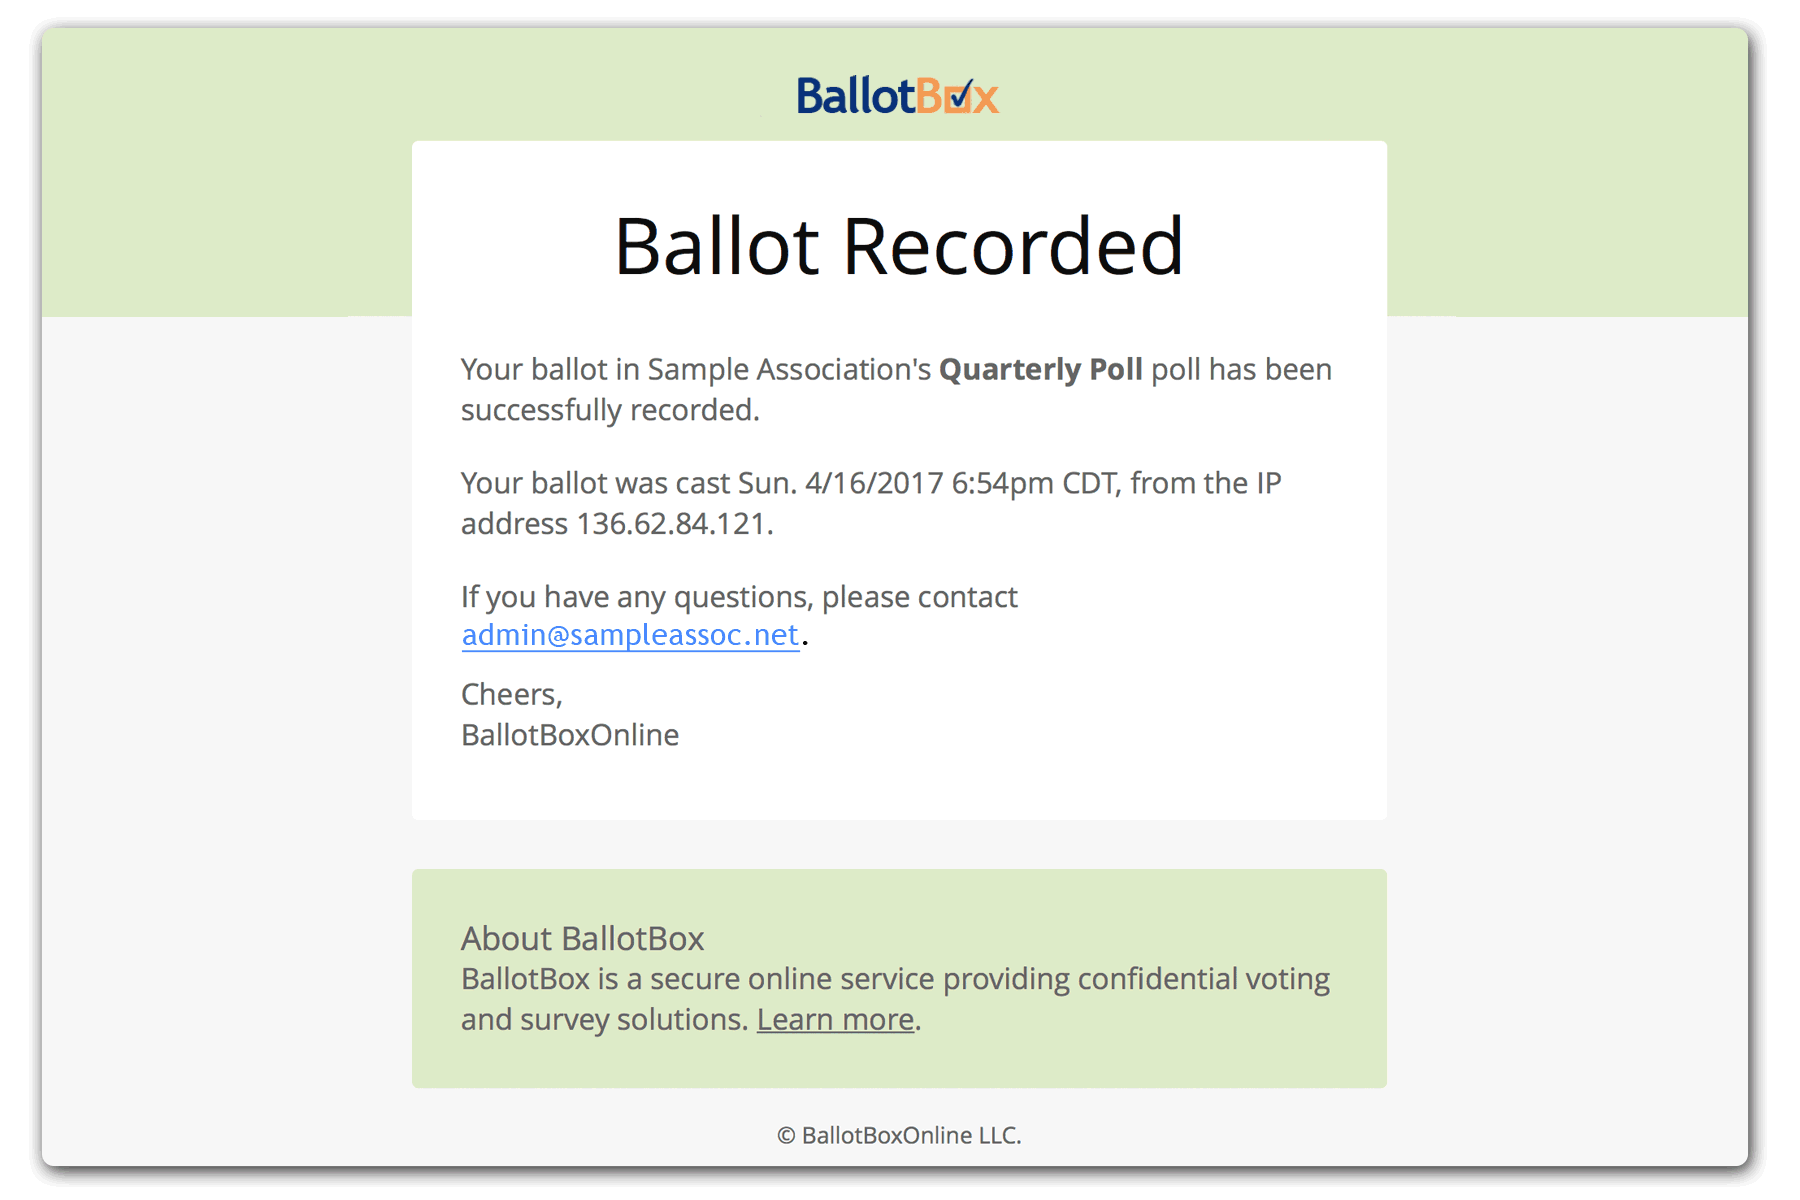 BallotBox records the votes